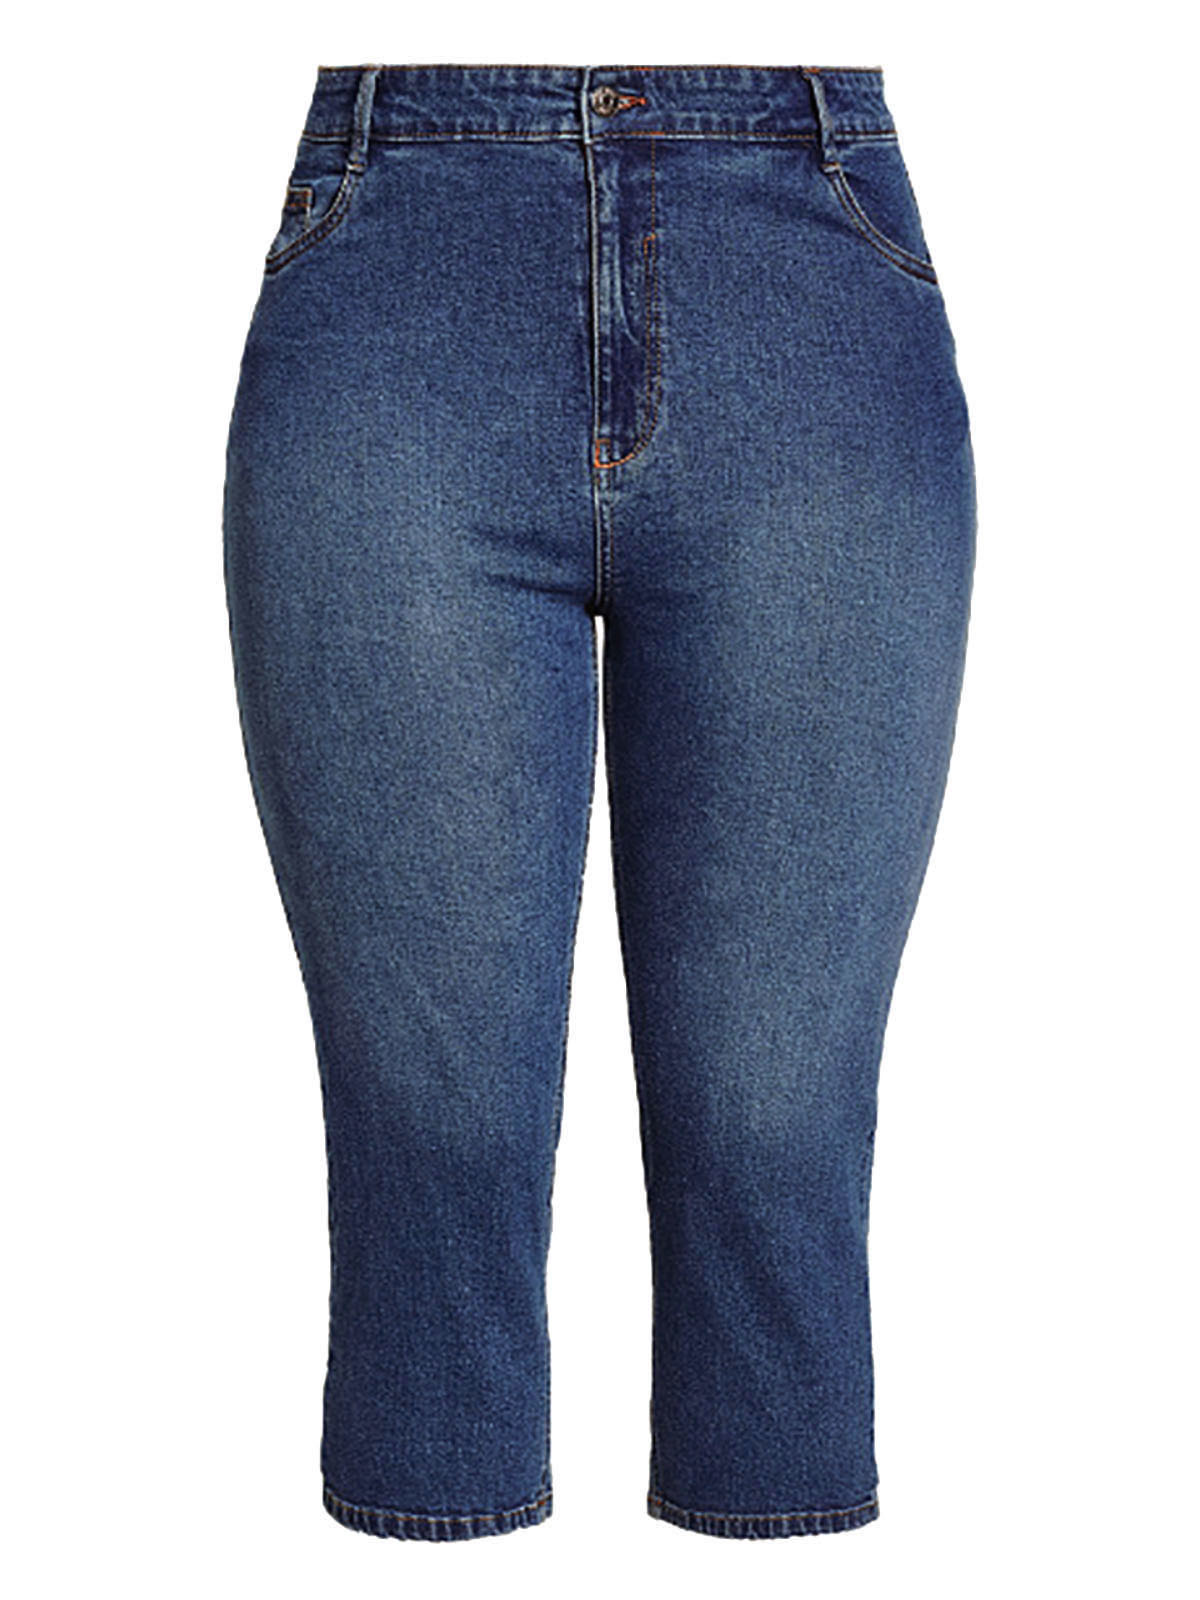 3vans Blue Denim Cropped High Rise Stretch Denim Jeans Plus Size 14 To 32